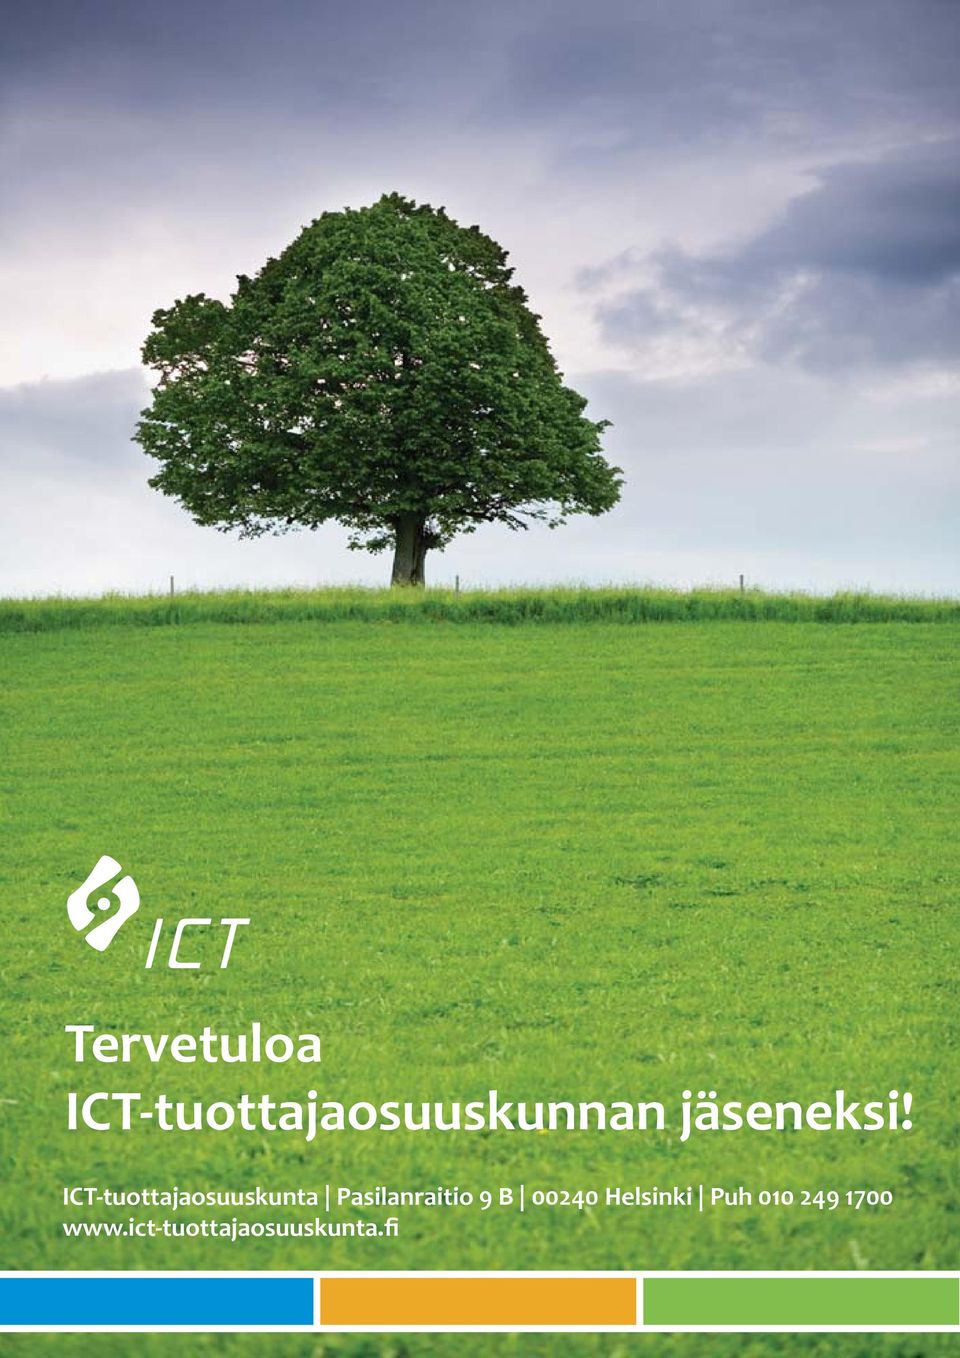 ICT-tuottajaosuuskunta Pasilanraitio